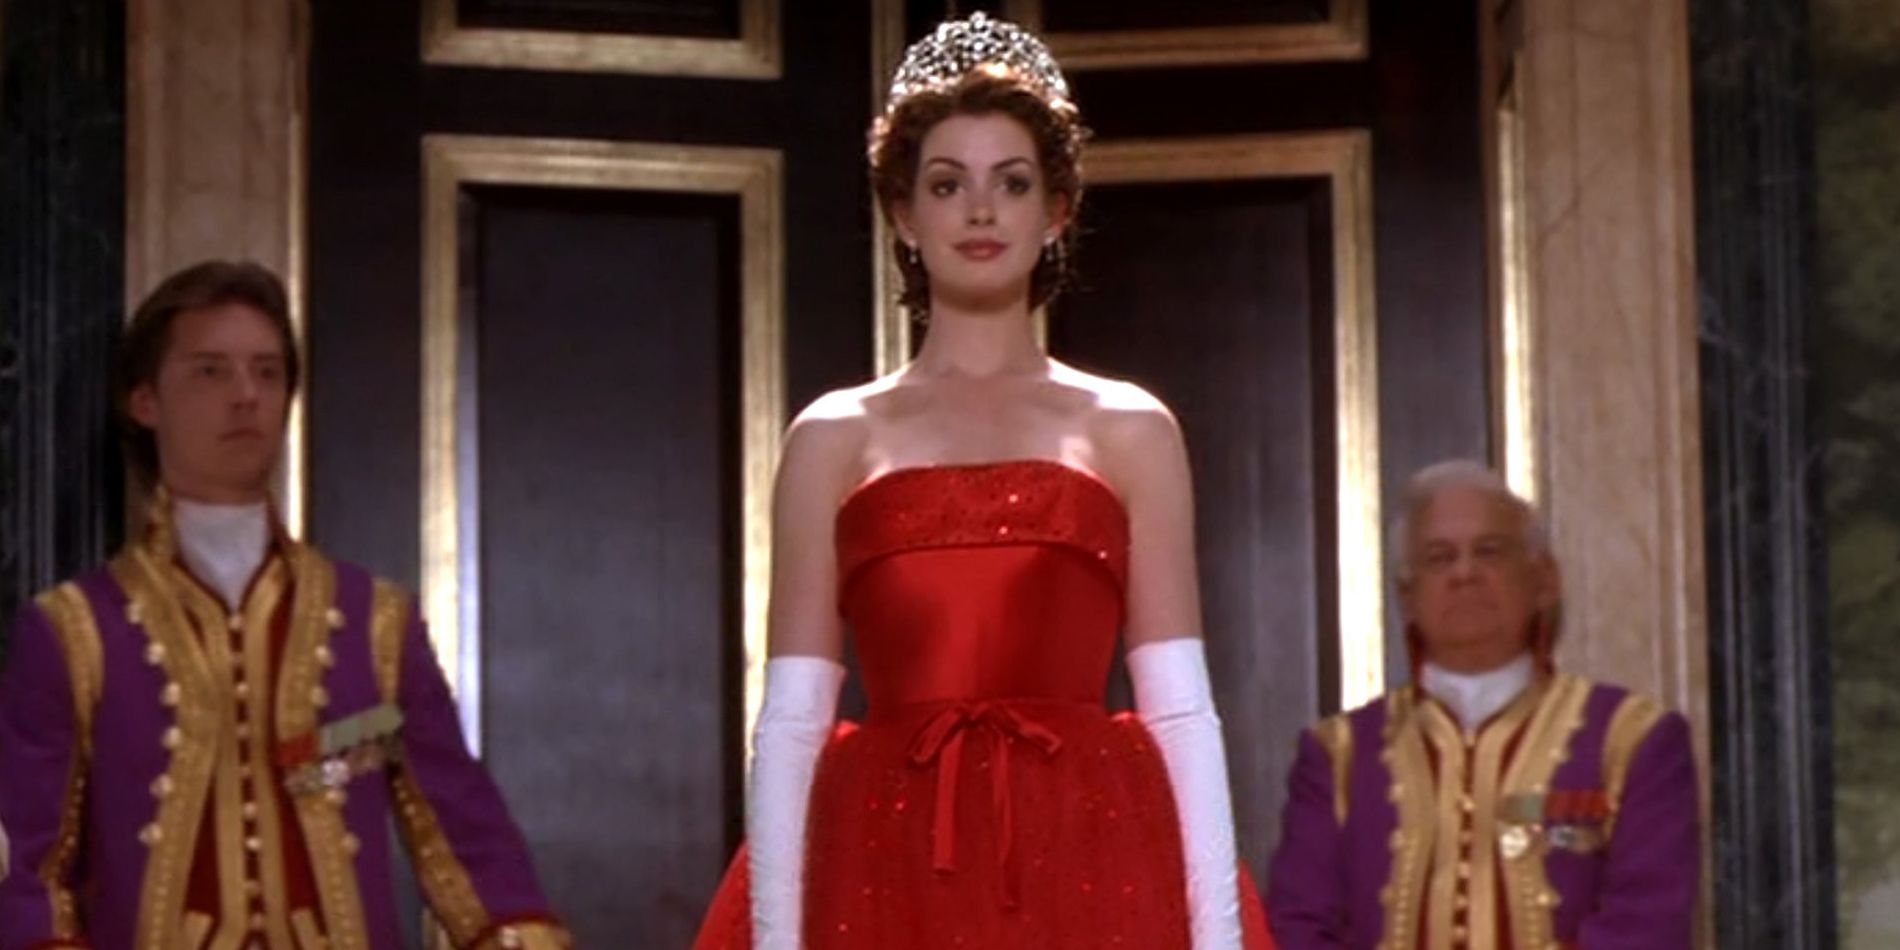 Mia wearing a red dress and tiara in Princess Diaries 2